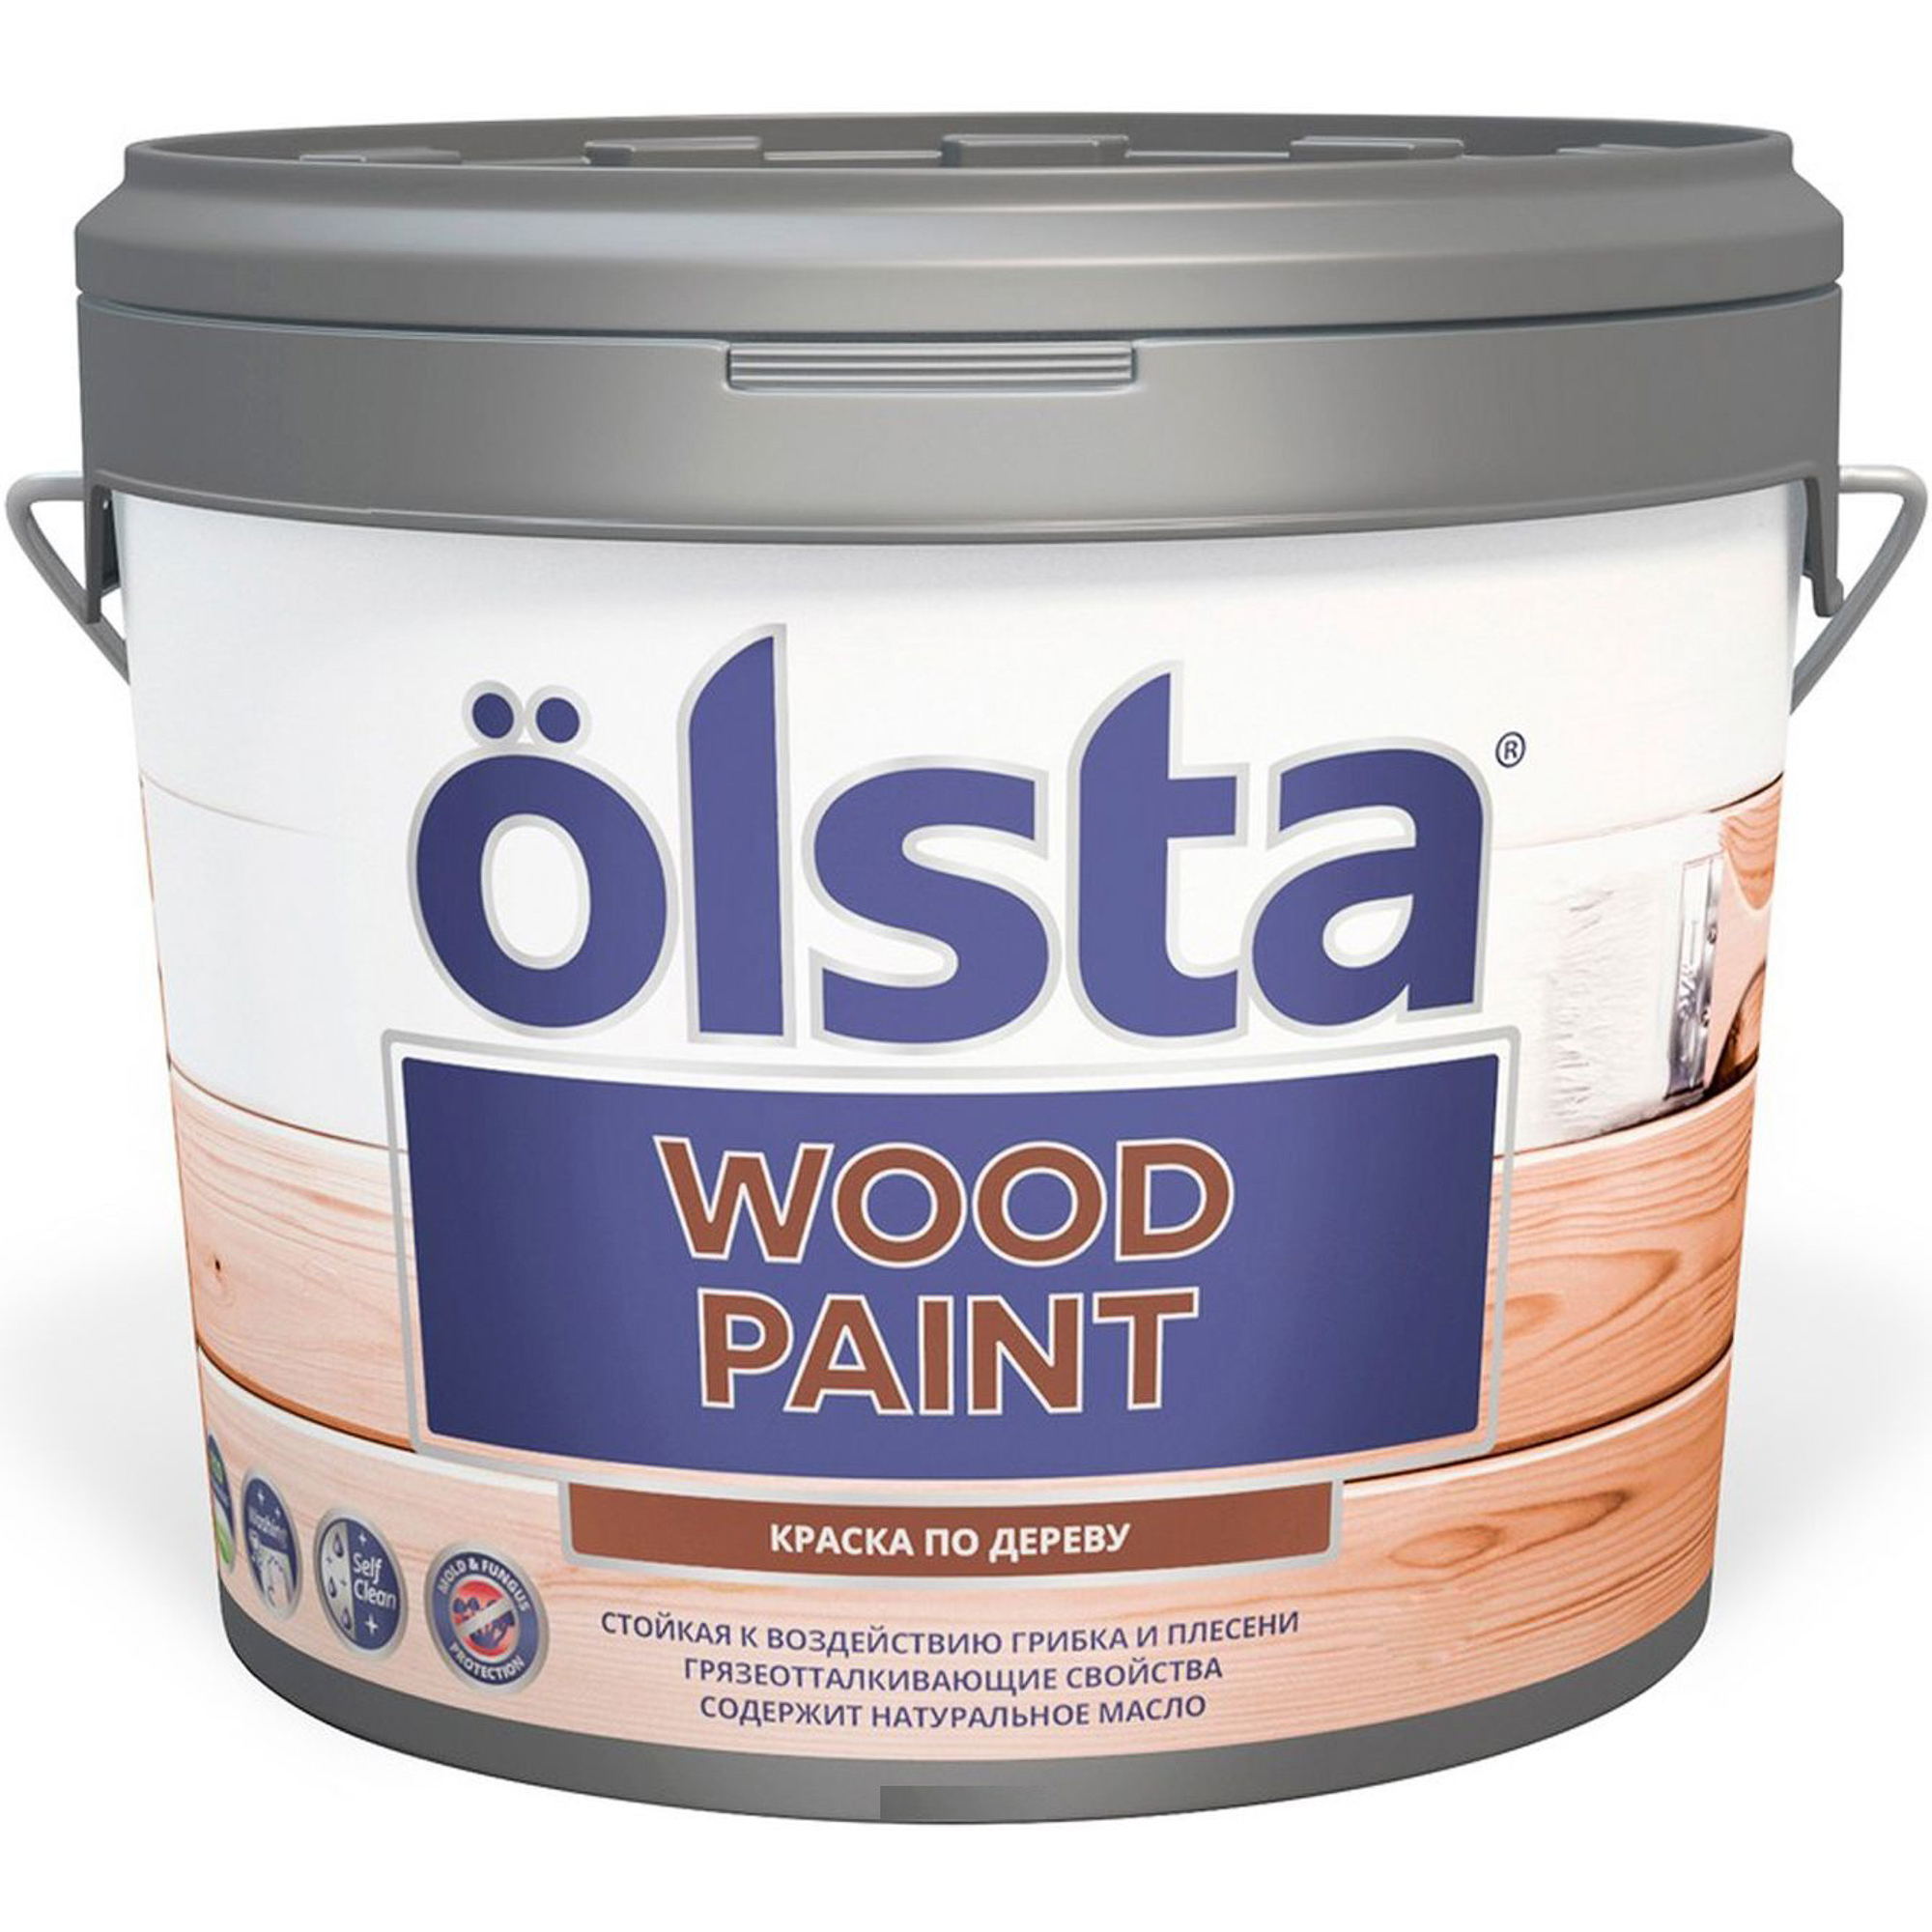 Краска Olsta wood paint для дерева a 2.7 л краска olsta wood paint база с 9 л